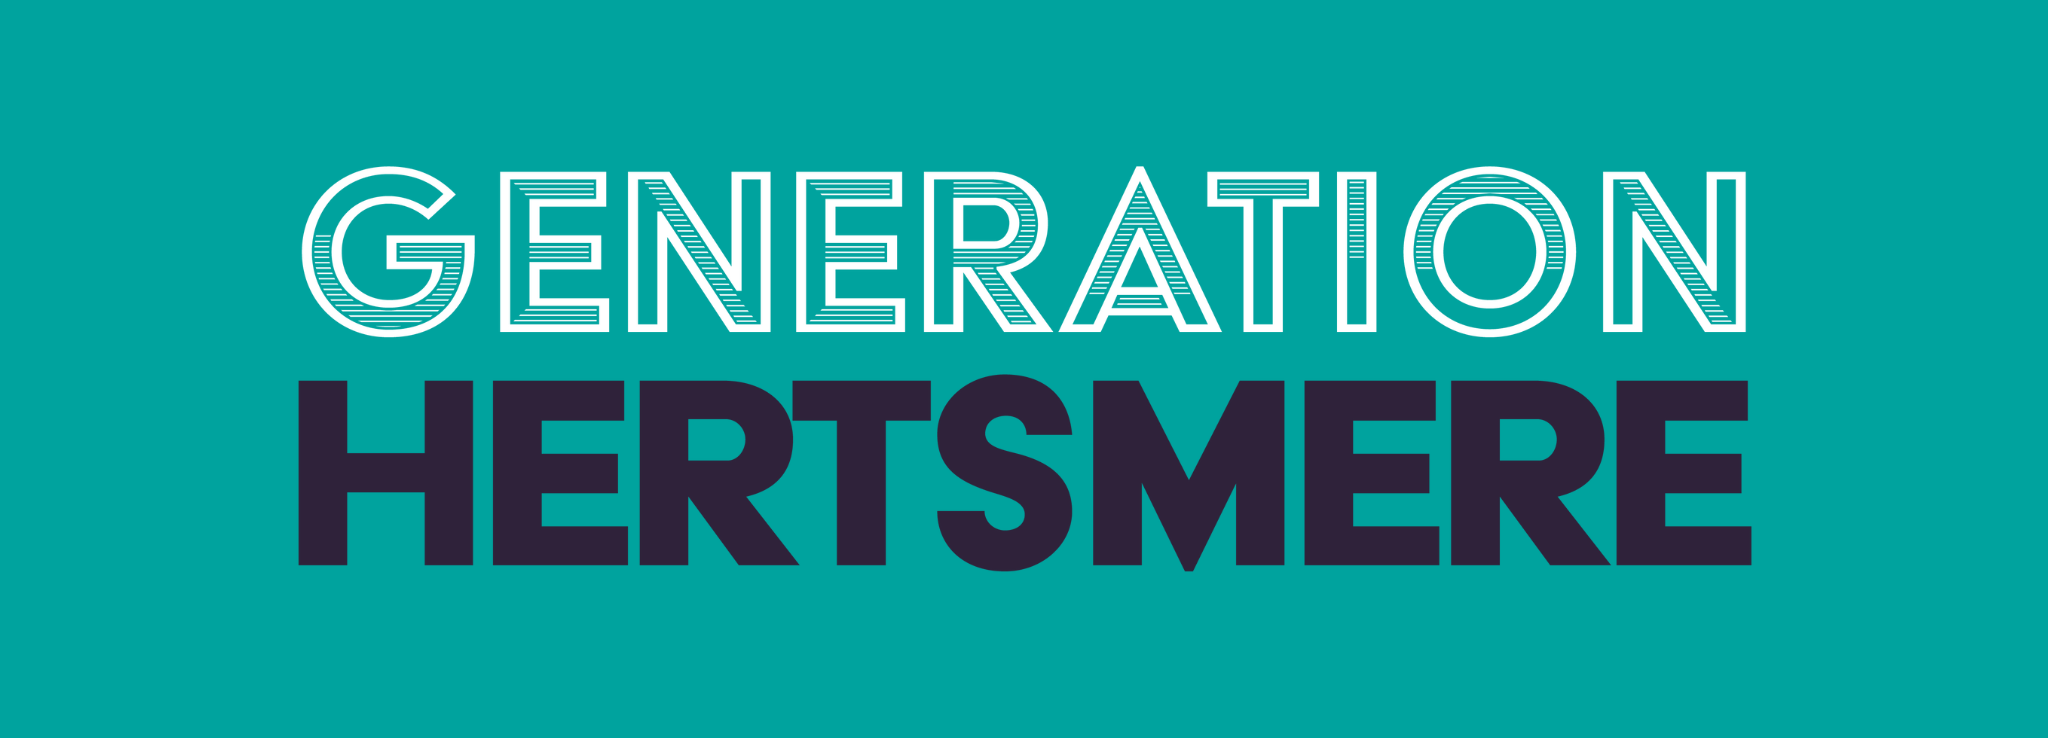 Generation Hertsmere logo